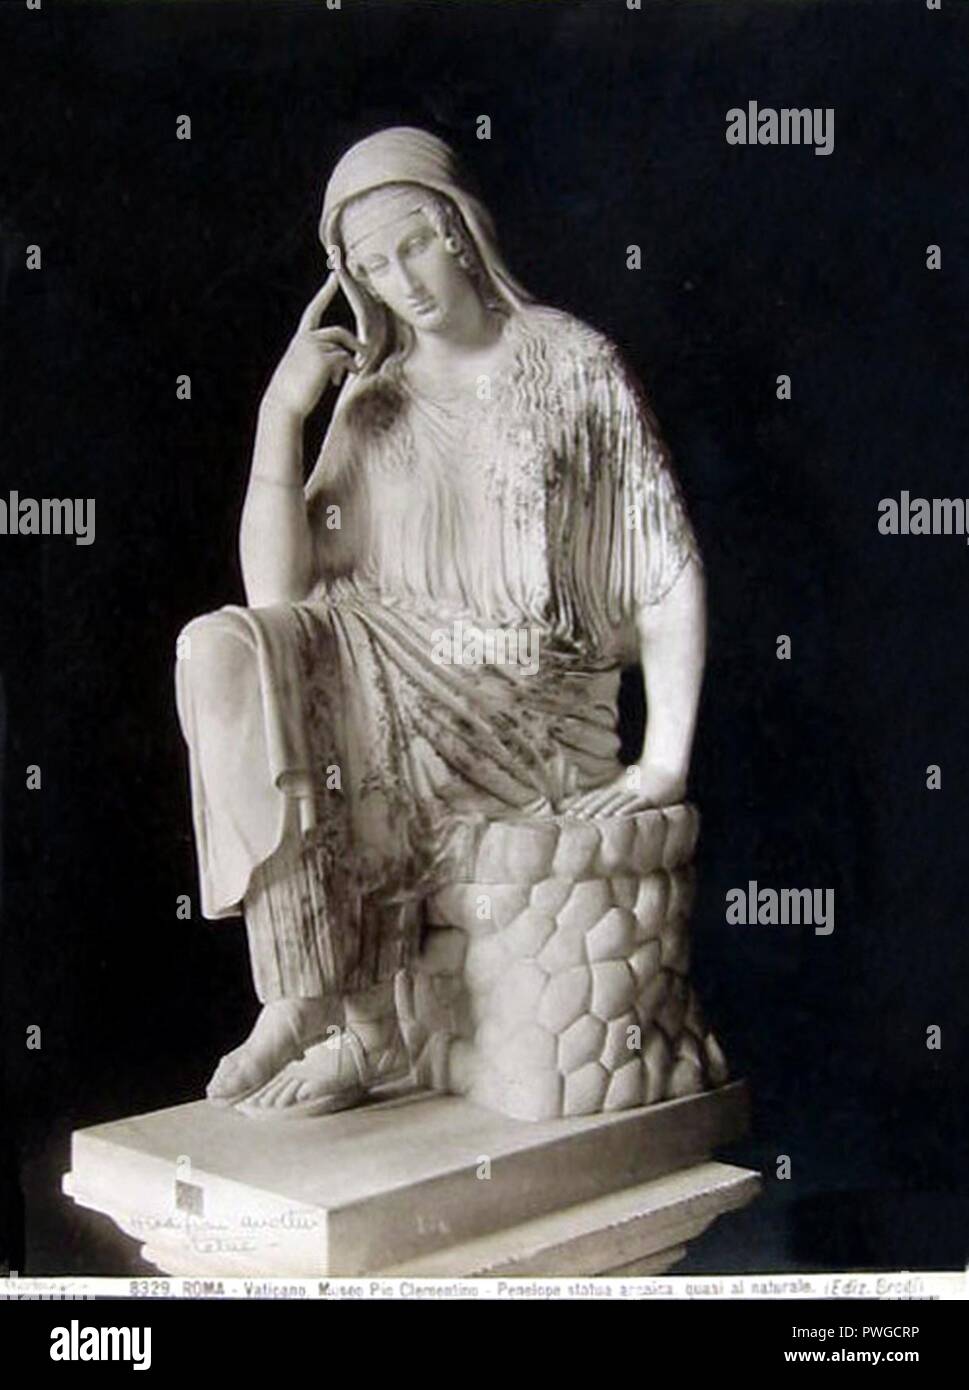 Brogi, Carlo (1850-1925) - n. 8329 - Roma - Vaticano - Museo Pio Clementino - Penelope - Statua arcaica, quasi al naturale. Stock Photo